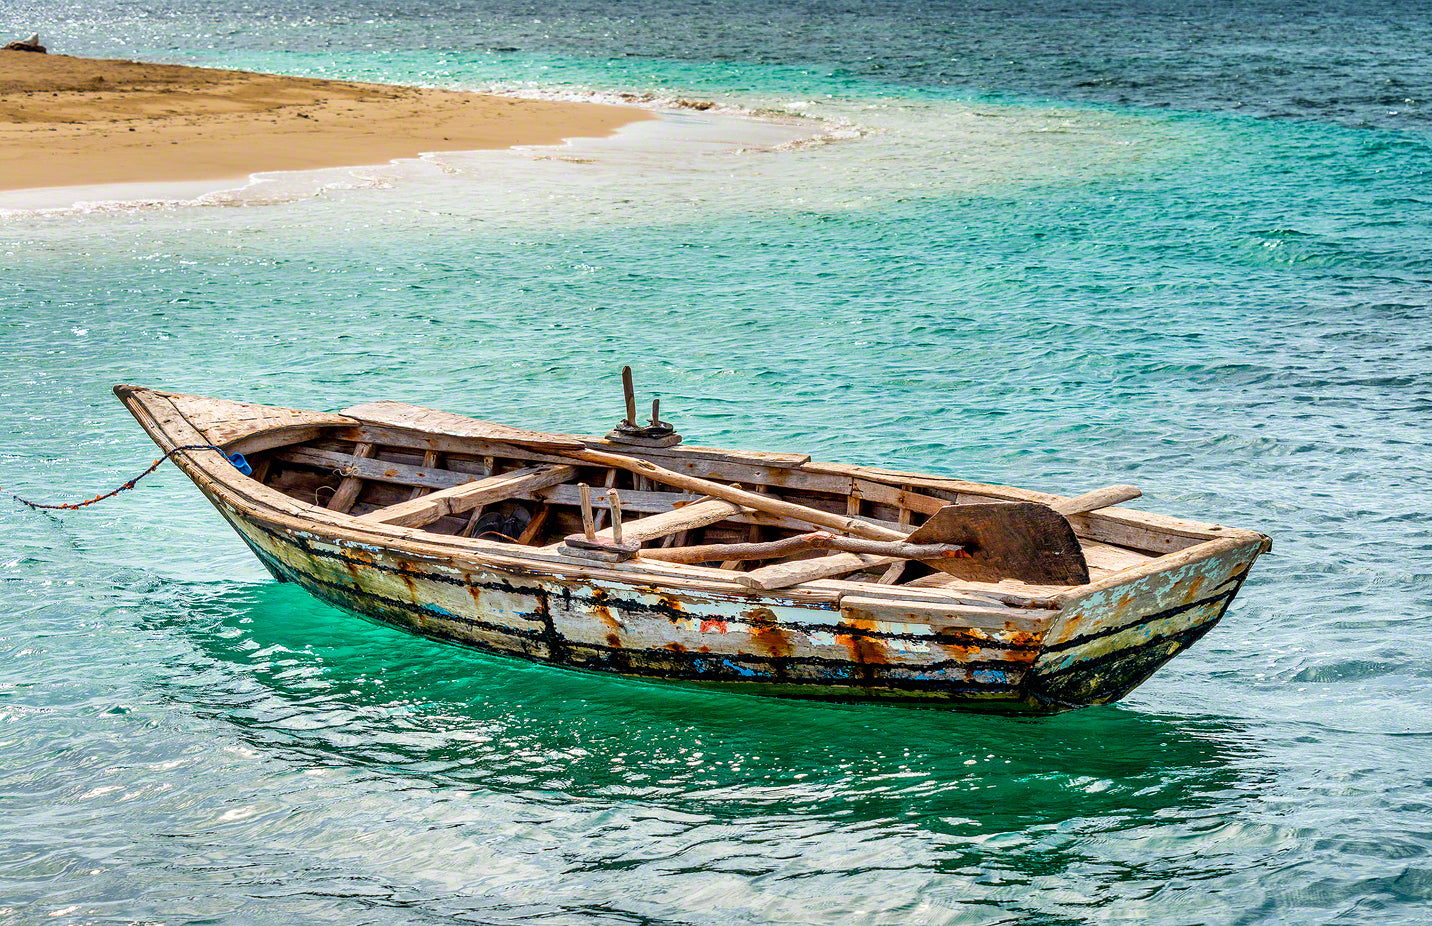 A photo of a rustic Haitian fisherman's boat in beautiful Caribbean water